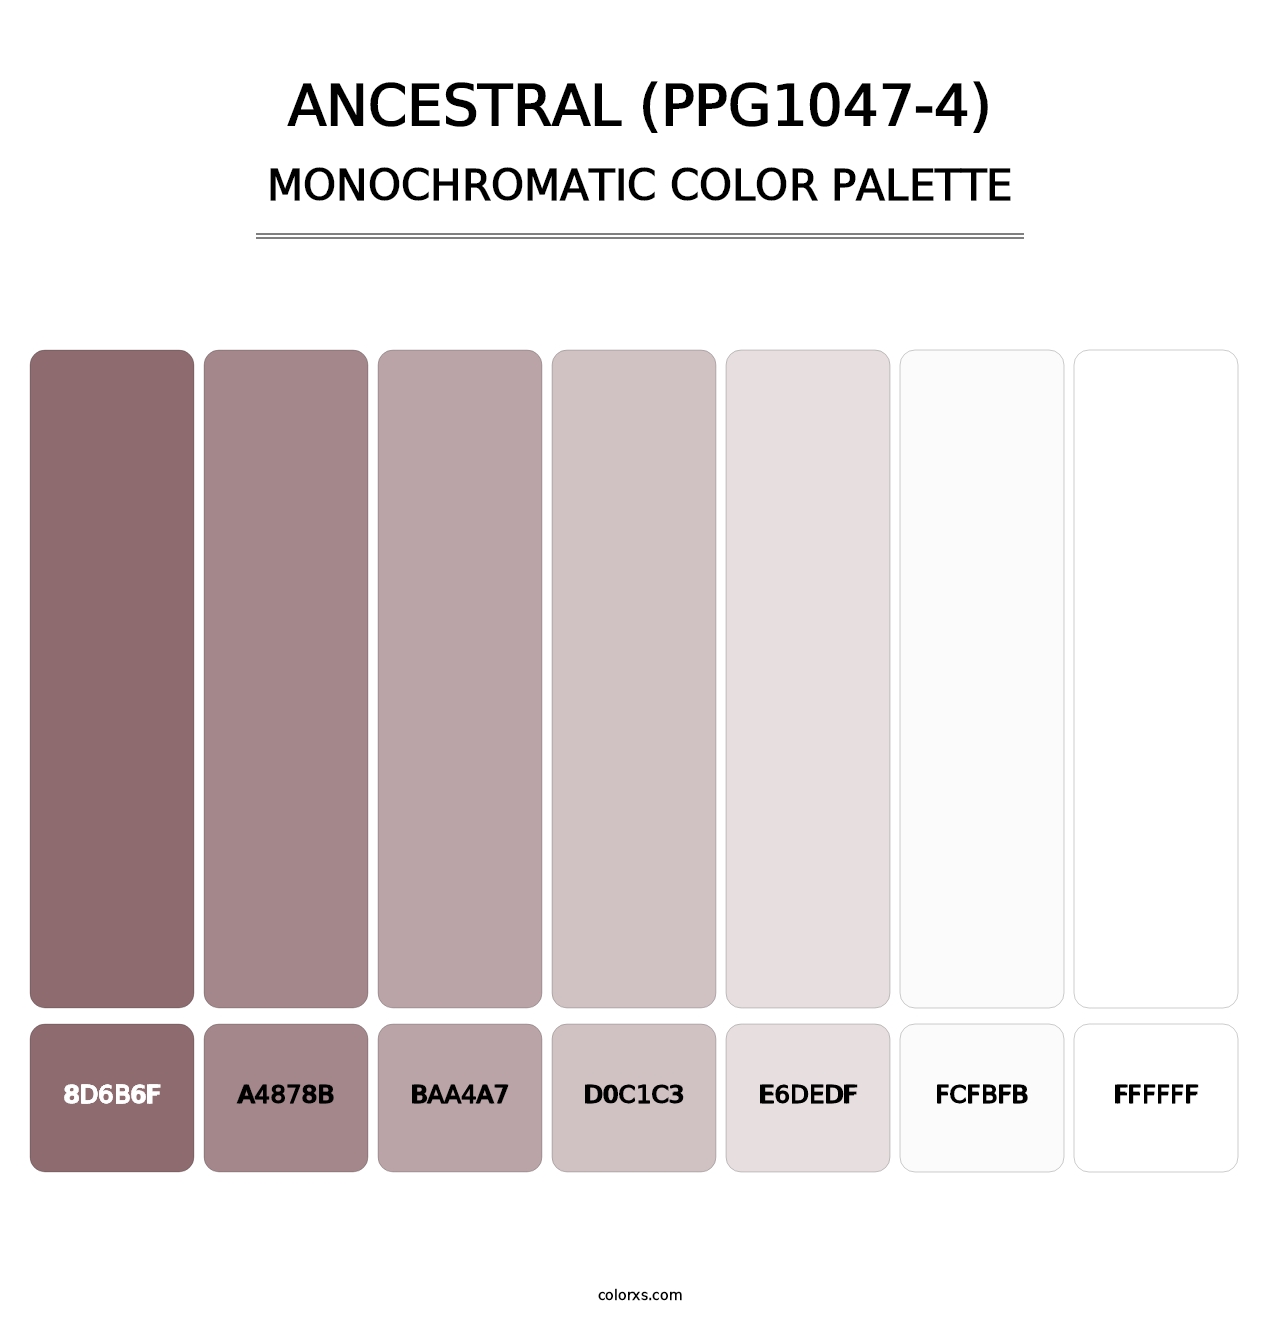 Ancestral (PPG1047-4) - Monochromatic Color Palette